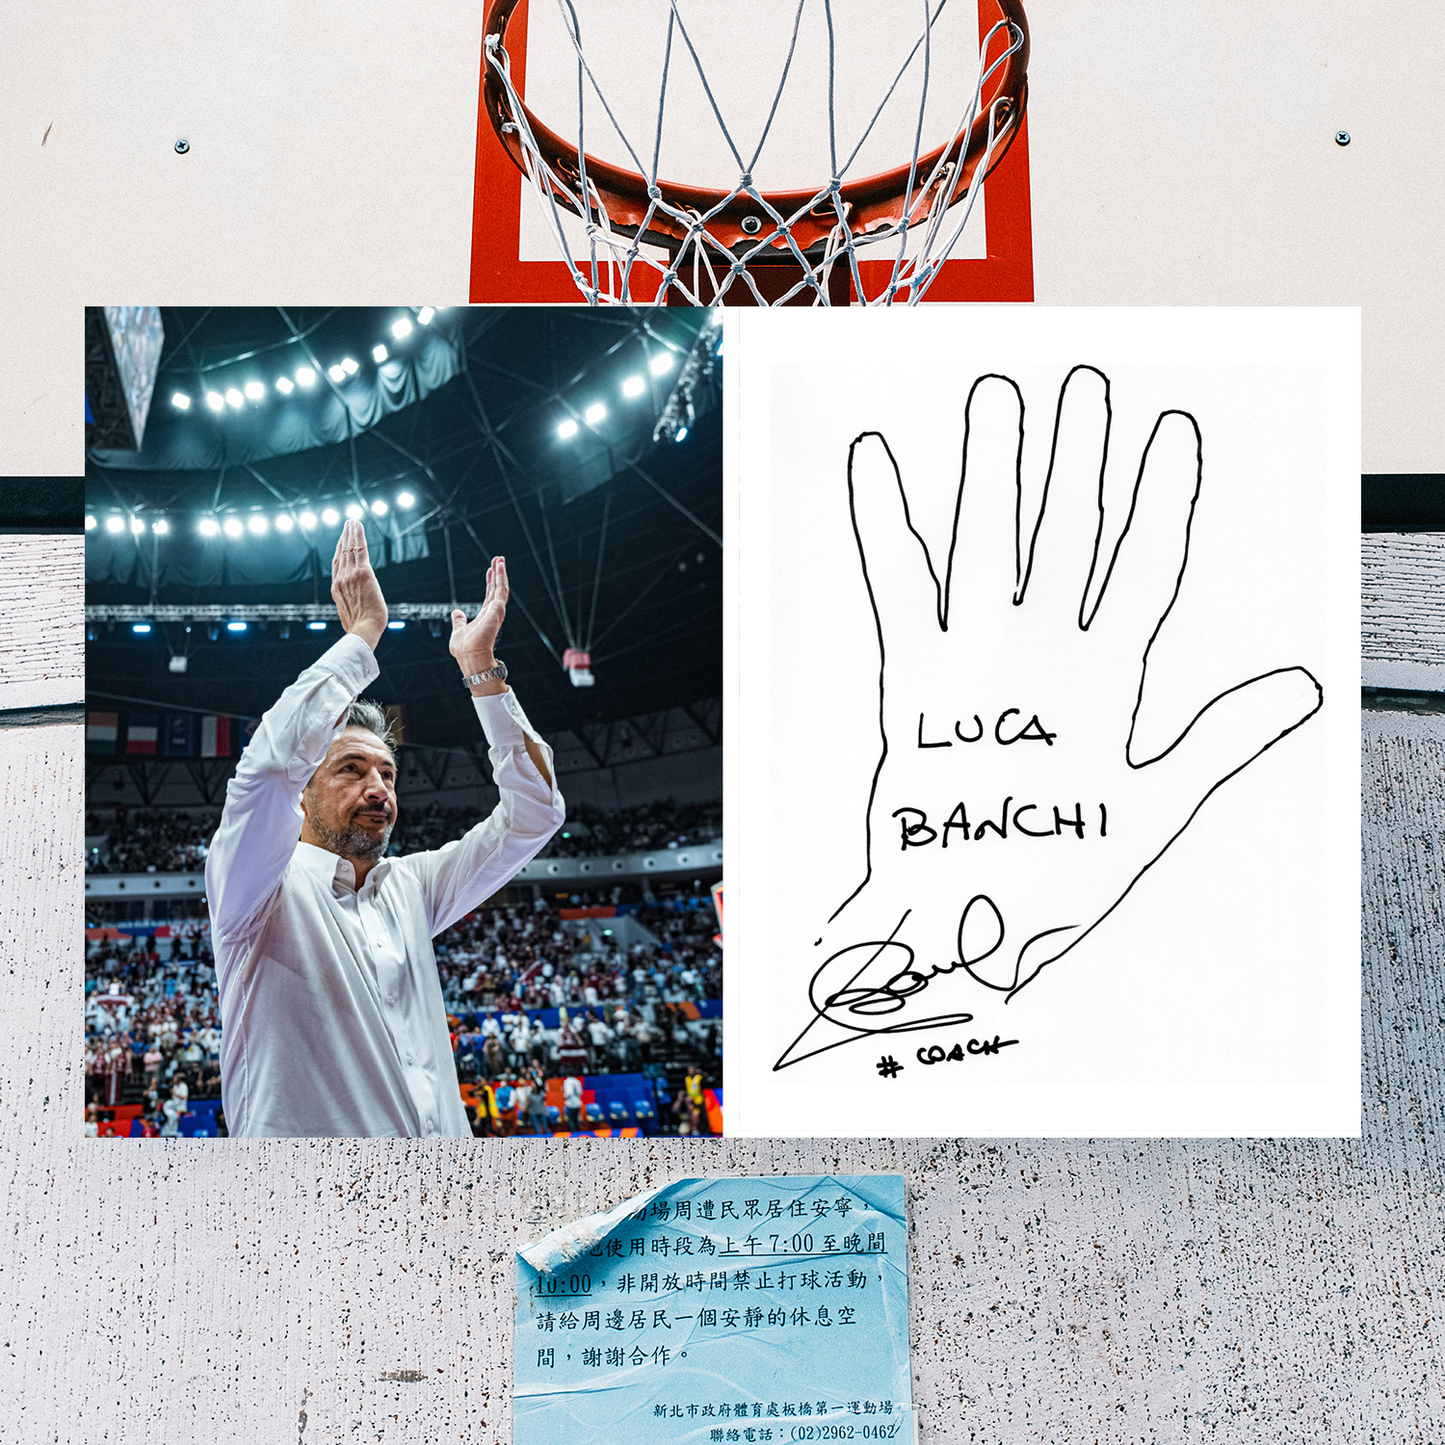 Fotogrāmata / Photo book "LATVIAAA. Basketball World Cup 2023"